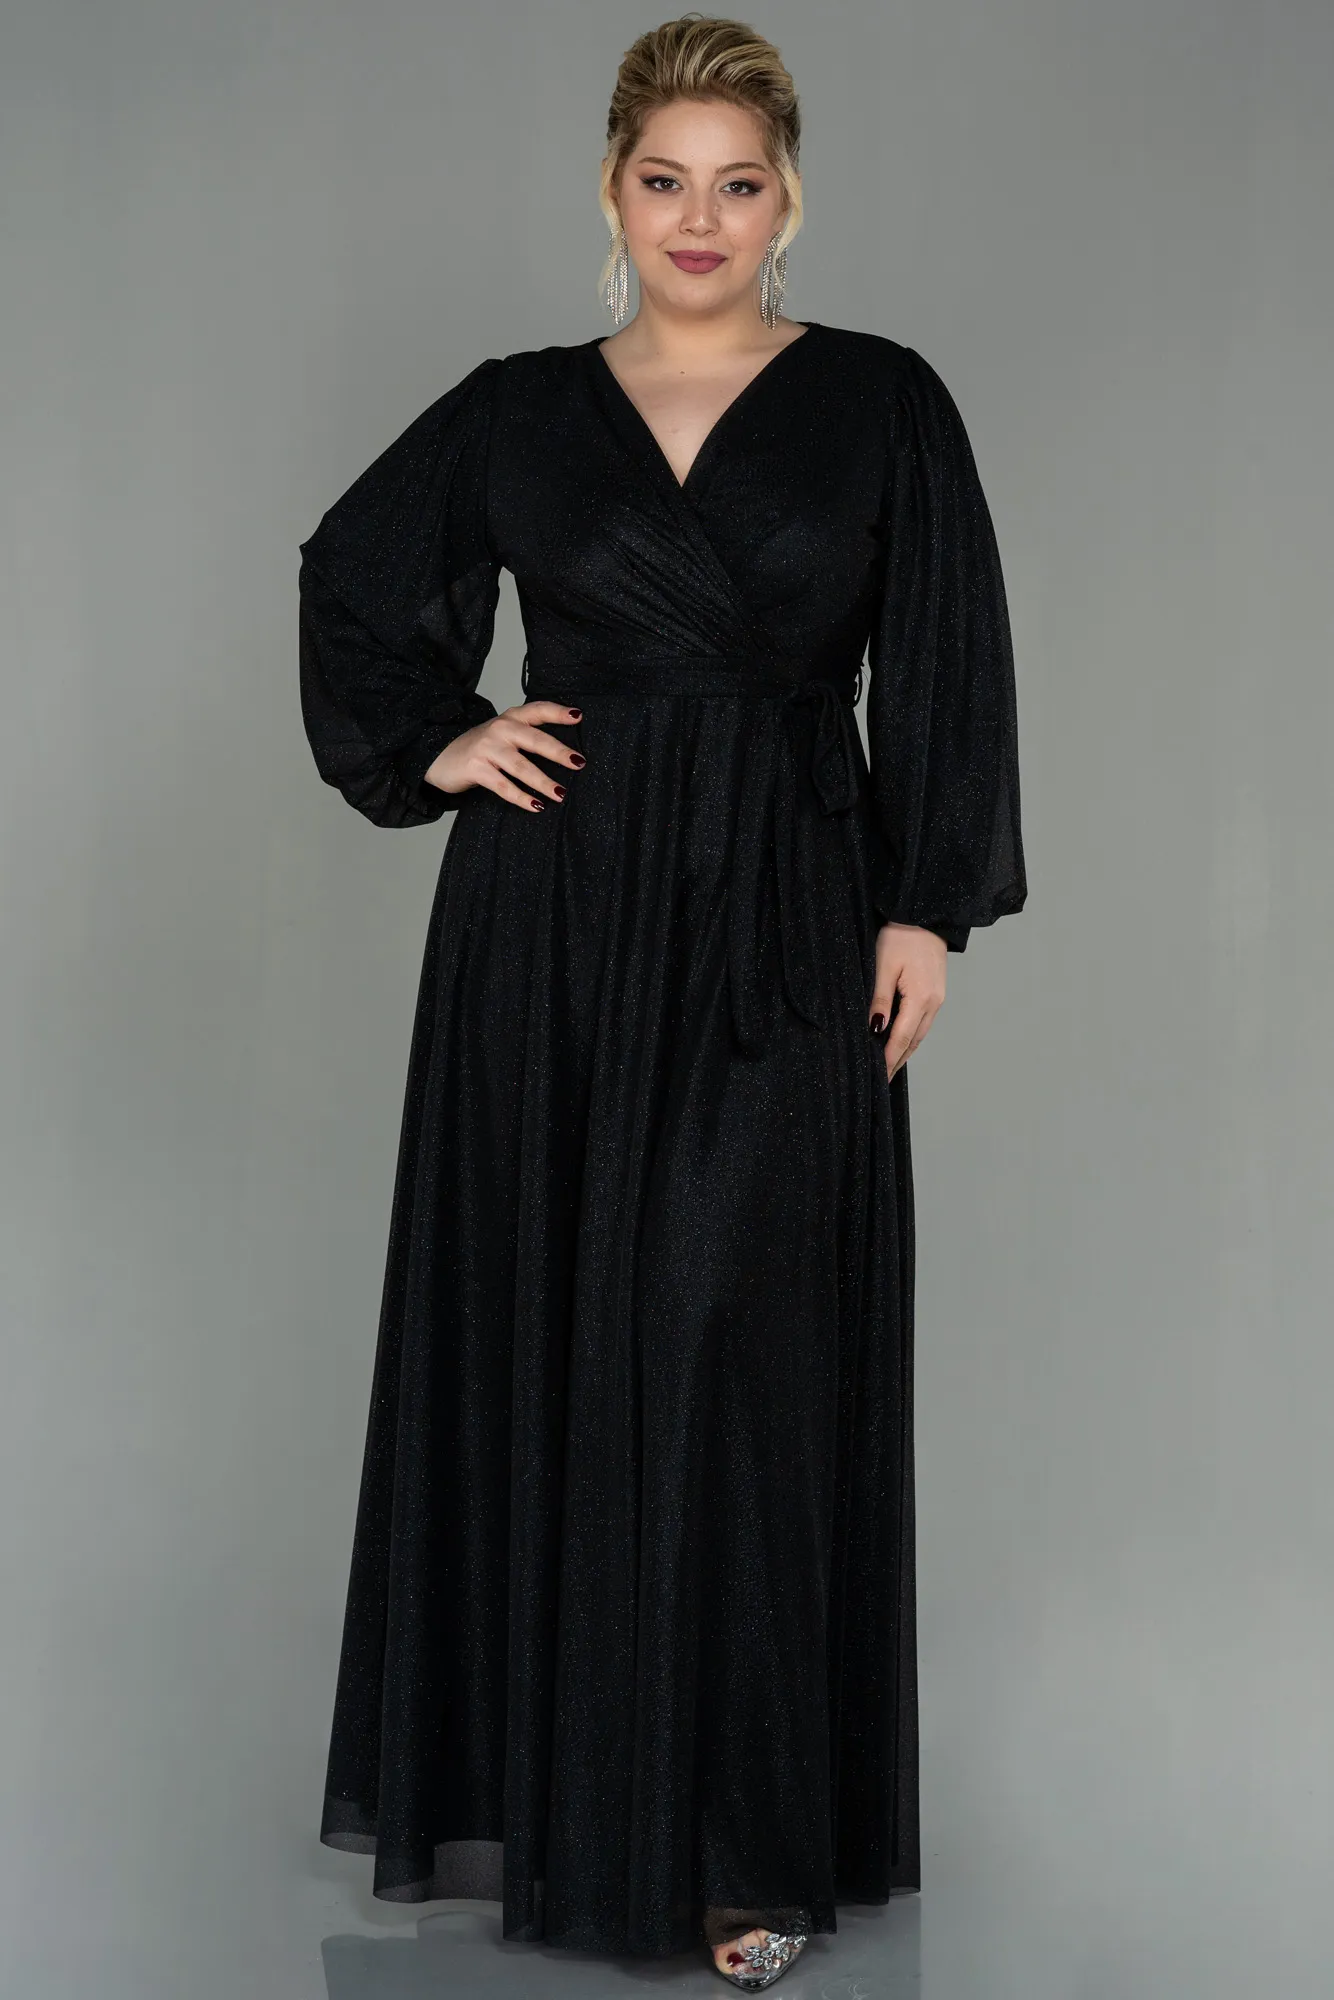 Black-Long Plus Size Evening Dress ABU2962